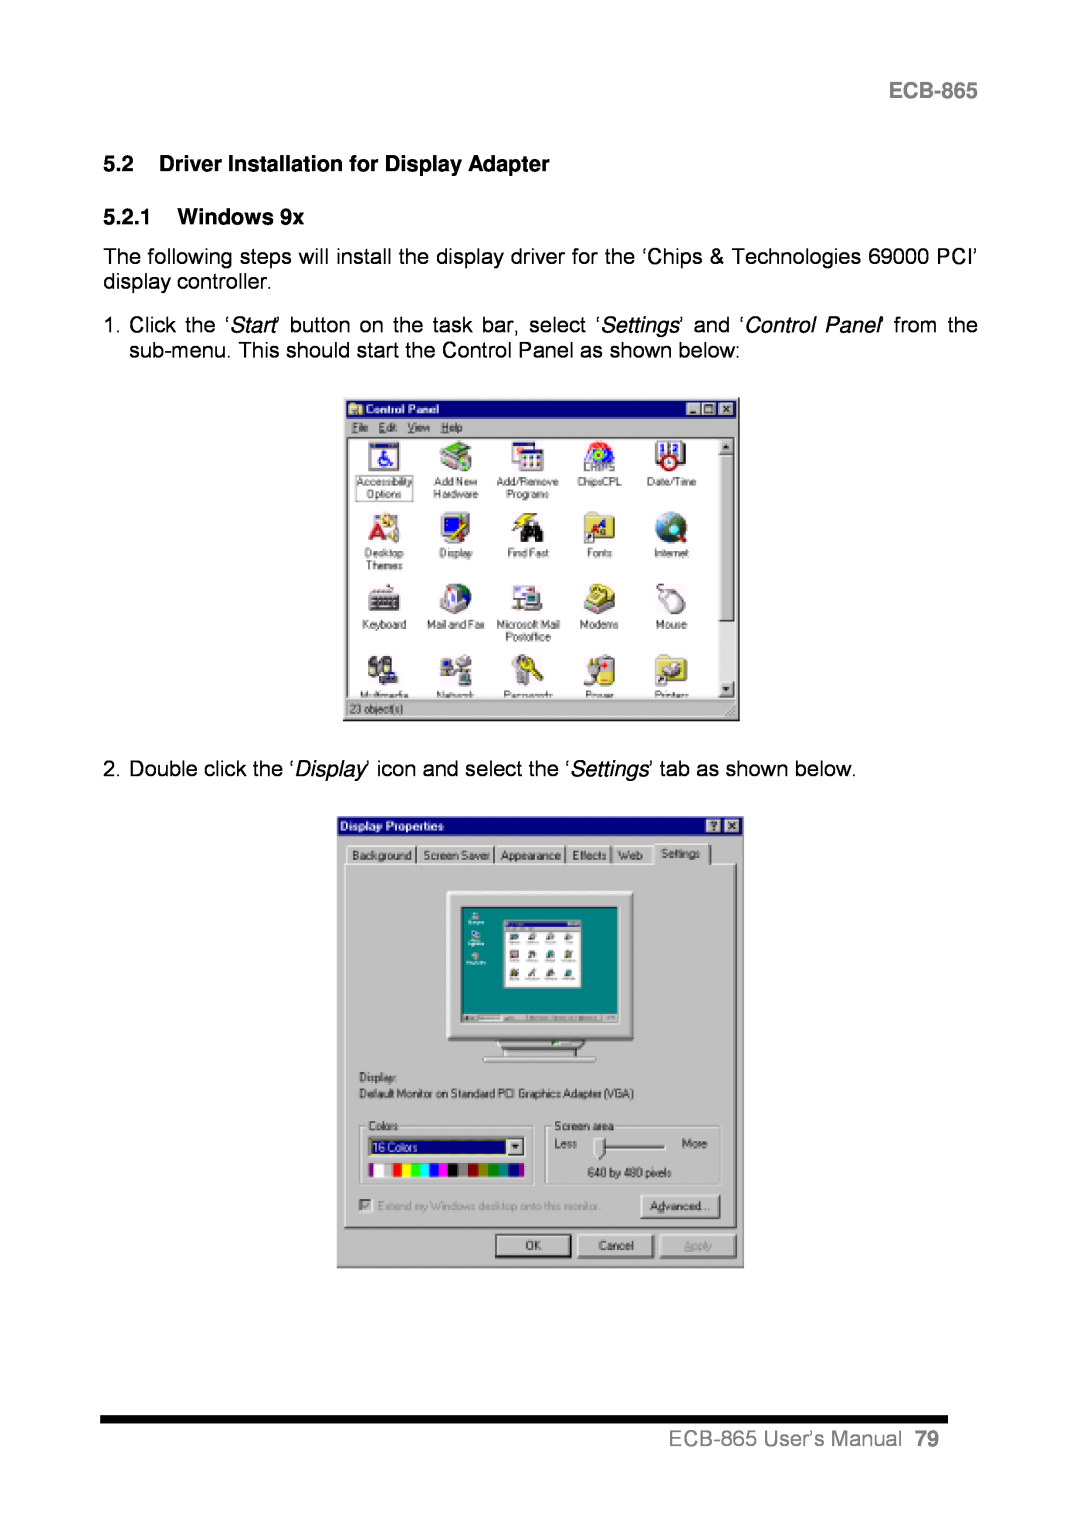 Intel user manual 5.2Driver Installation for Display Adapter, 5.2.1Windows, ECB-865User’s Manual 